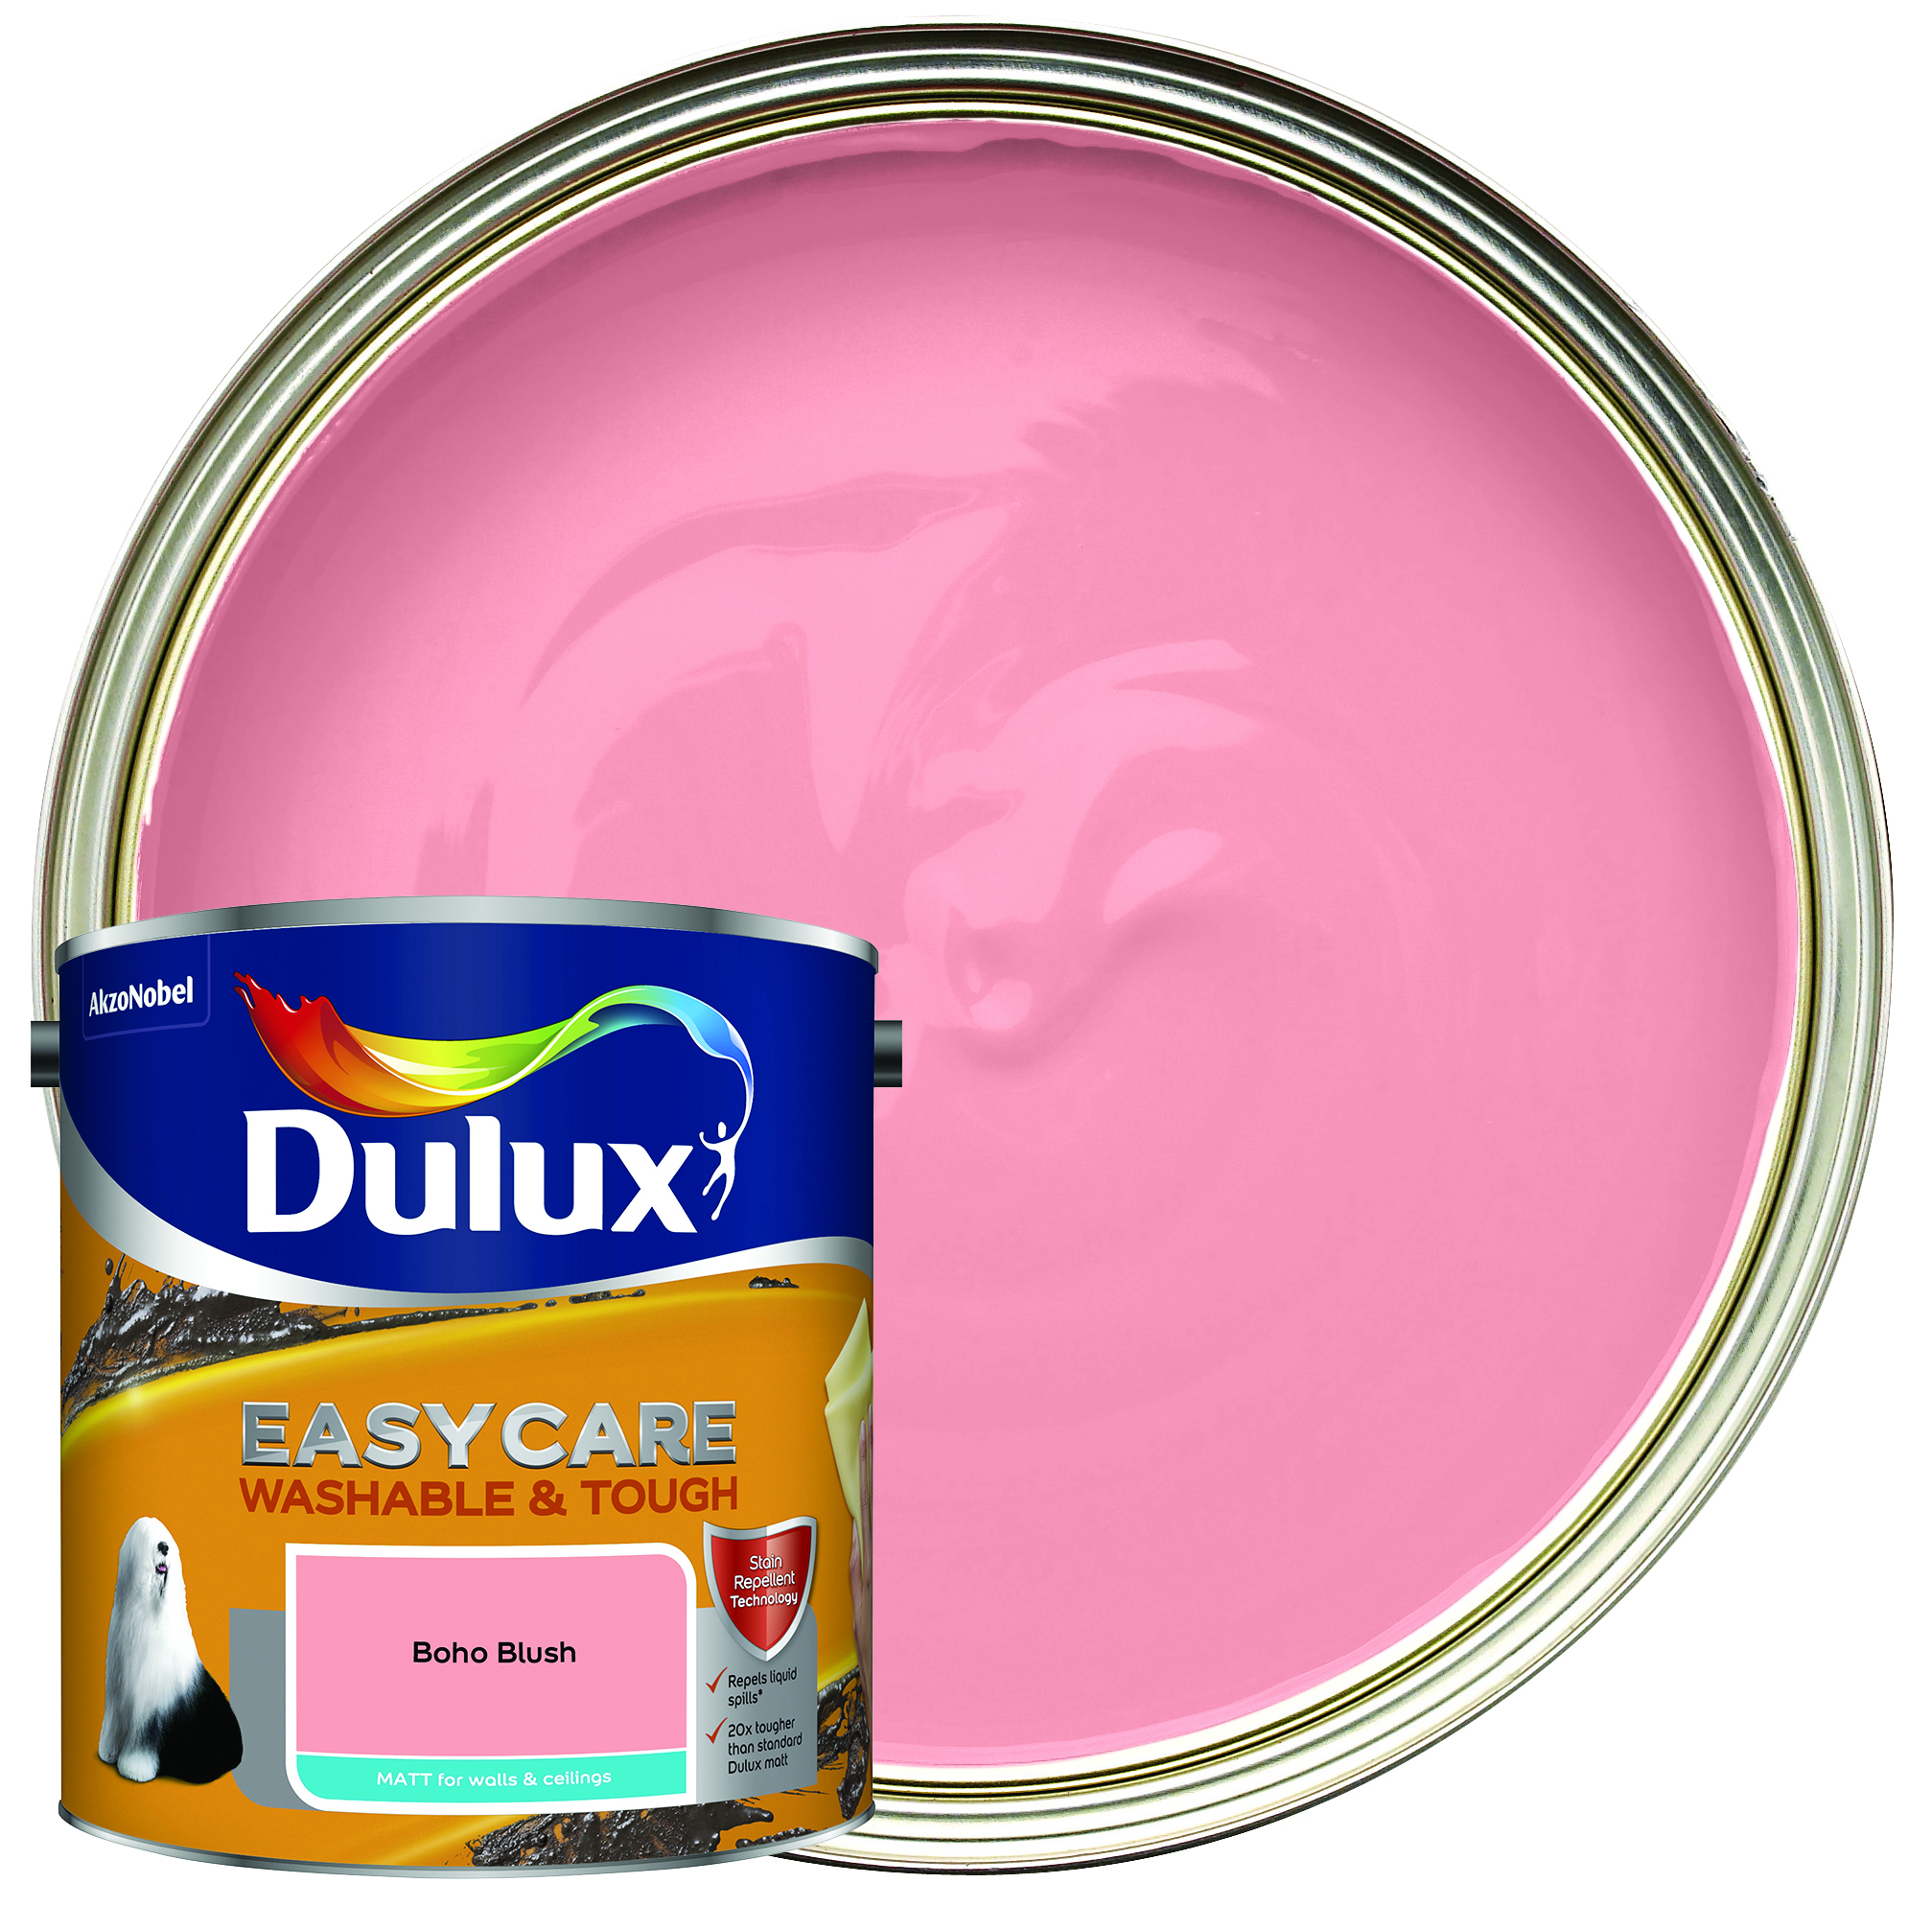 Dulux Easycare Washable & Tough Matt Emulsion Paint - Boho Blush - 2.5L